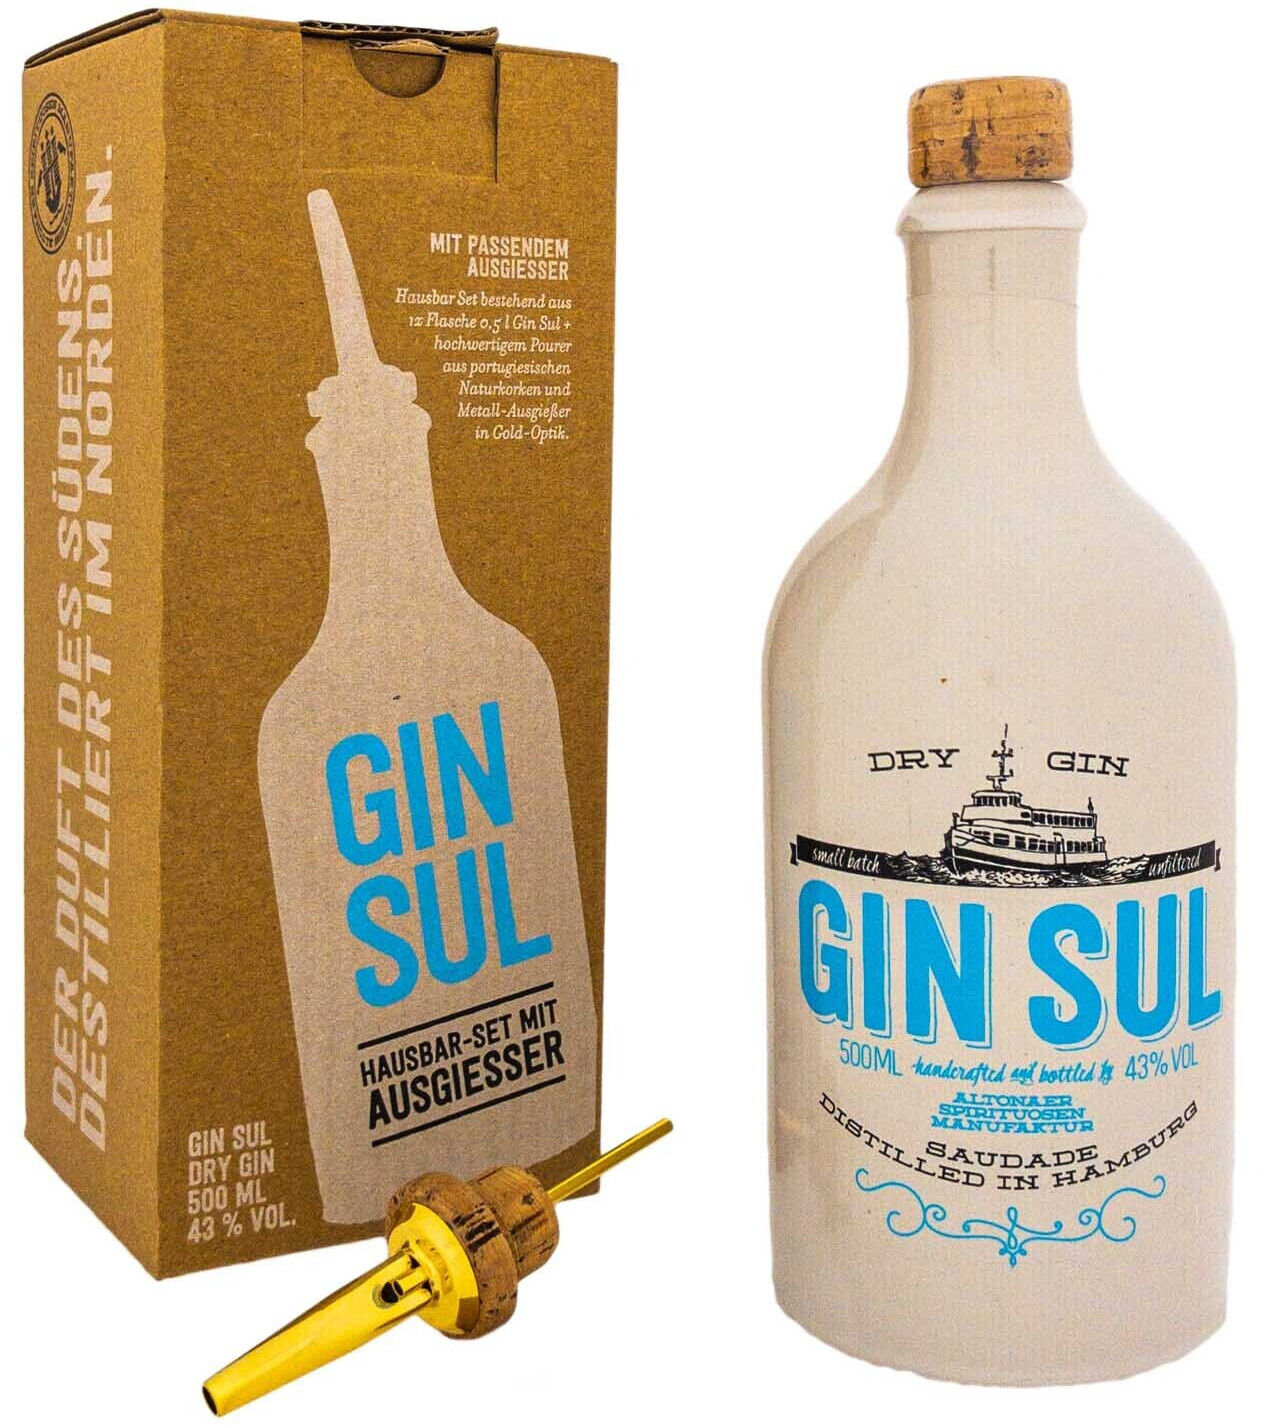 Gin Sul Dry Gin ab bei | € Hausbar-Set Preisvergleich 0,5l 43% 28,10